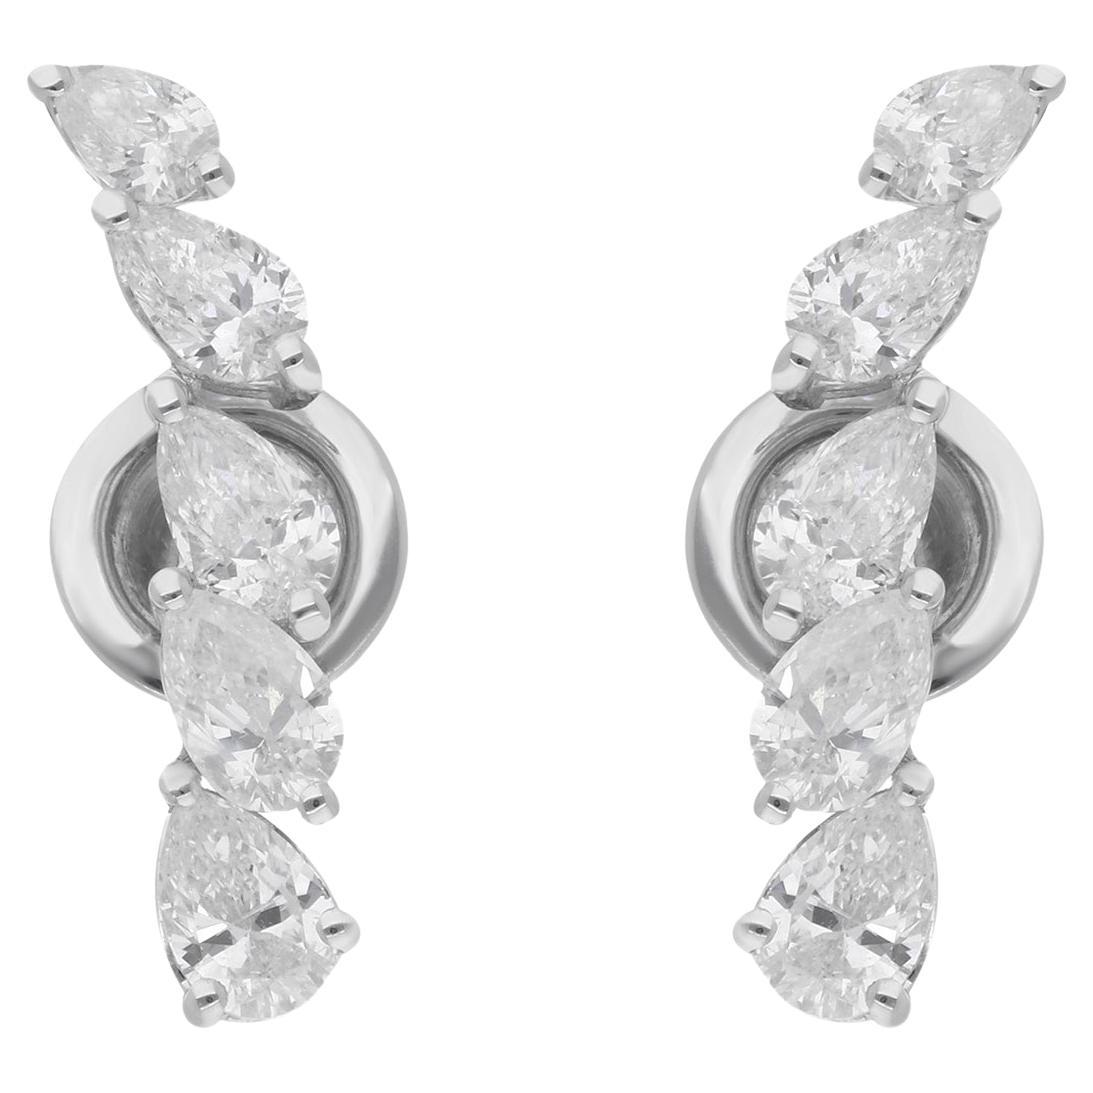 Natural Pear Shape Diamond Stud Earrings 14 Karat White Gold Handmade Jewelry